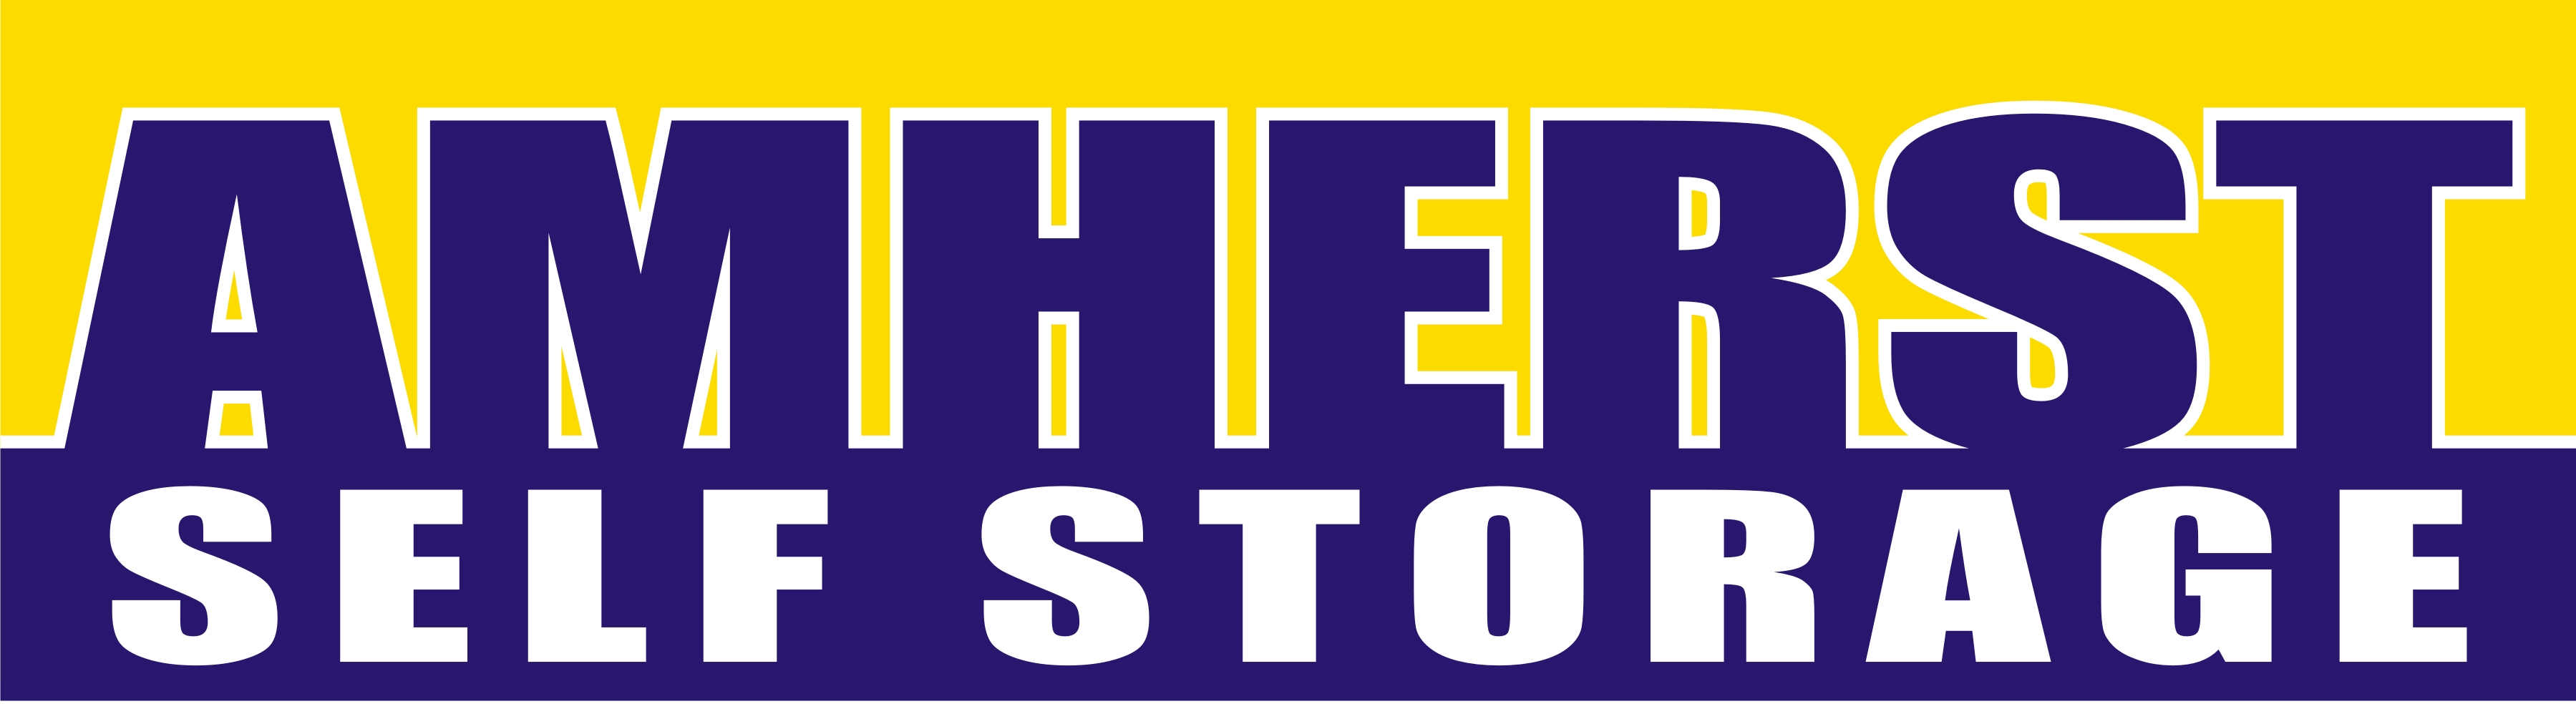 Amherst self storage logo